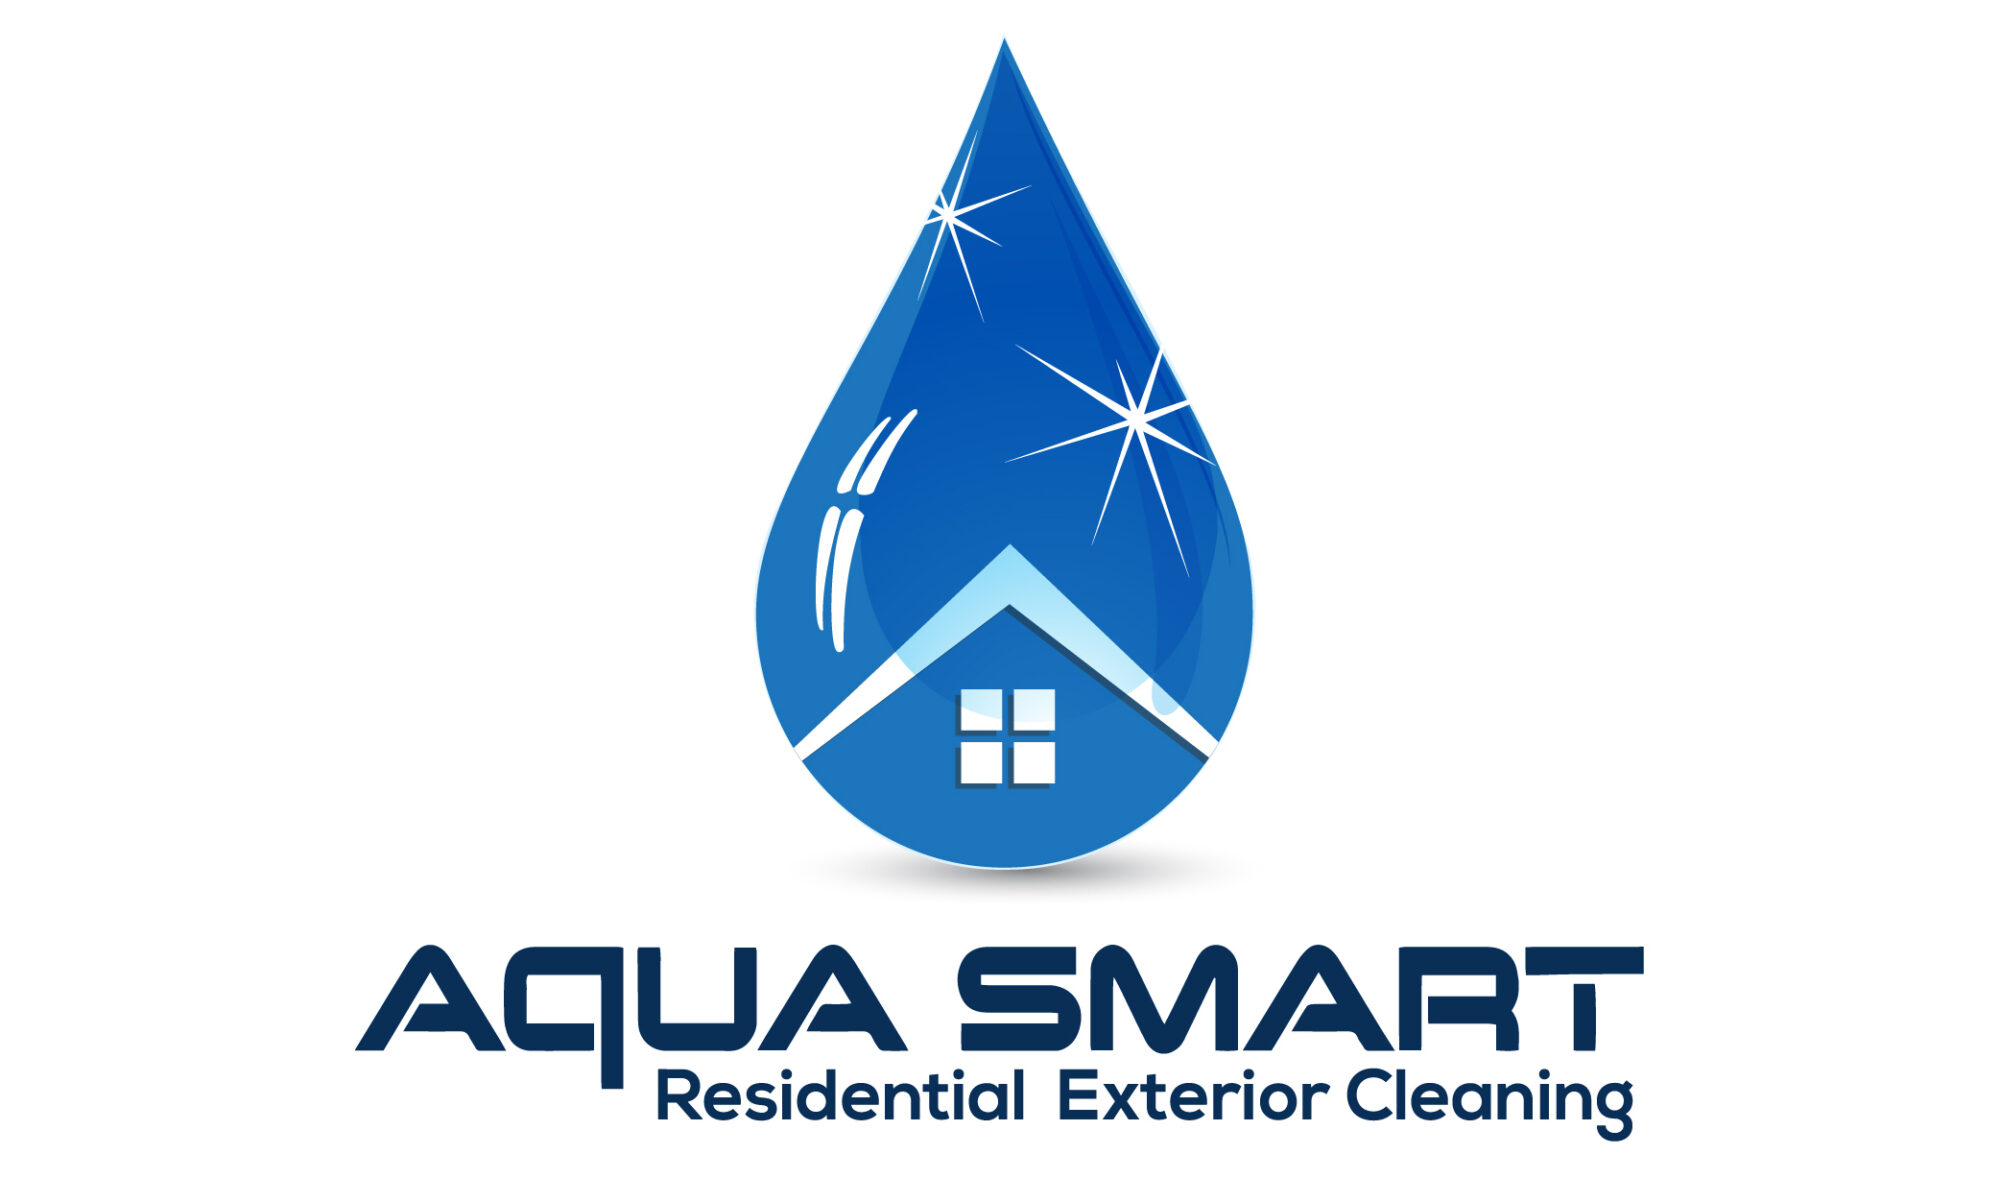 Aqua Smart Residential